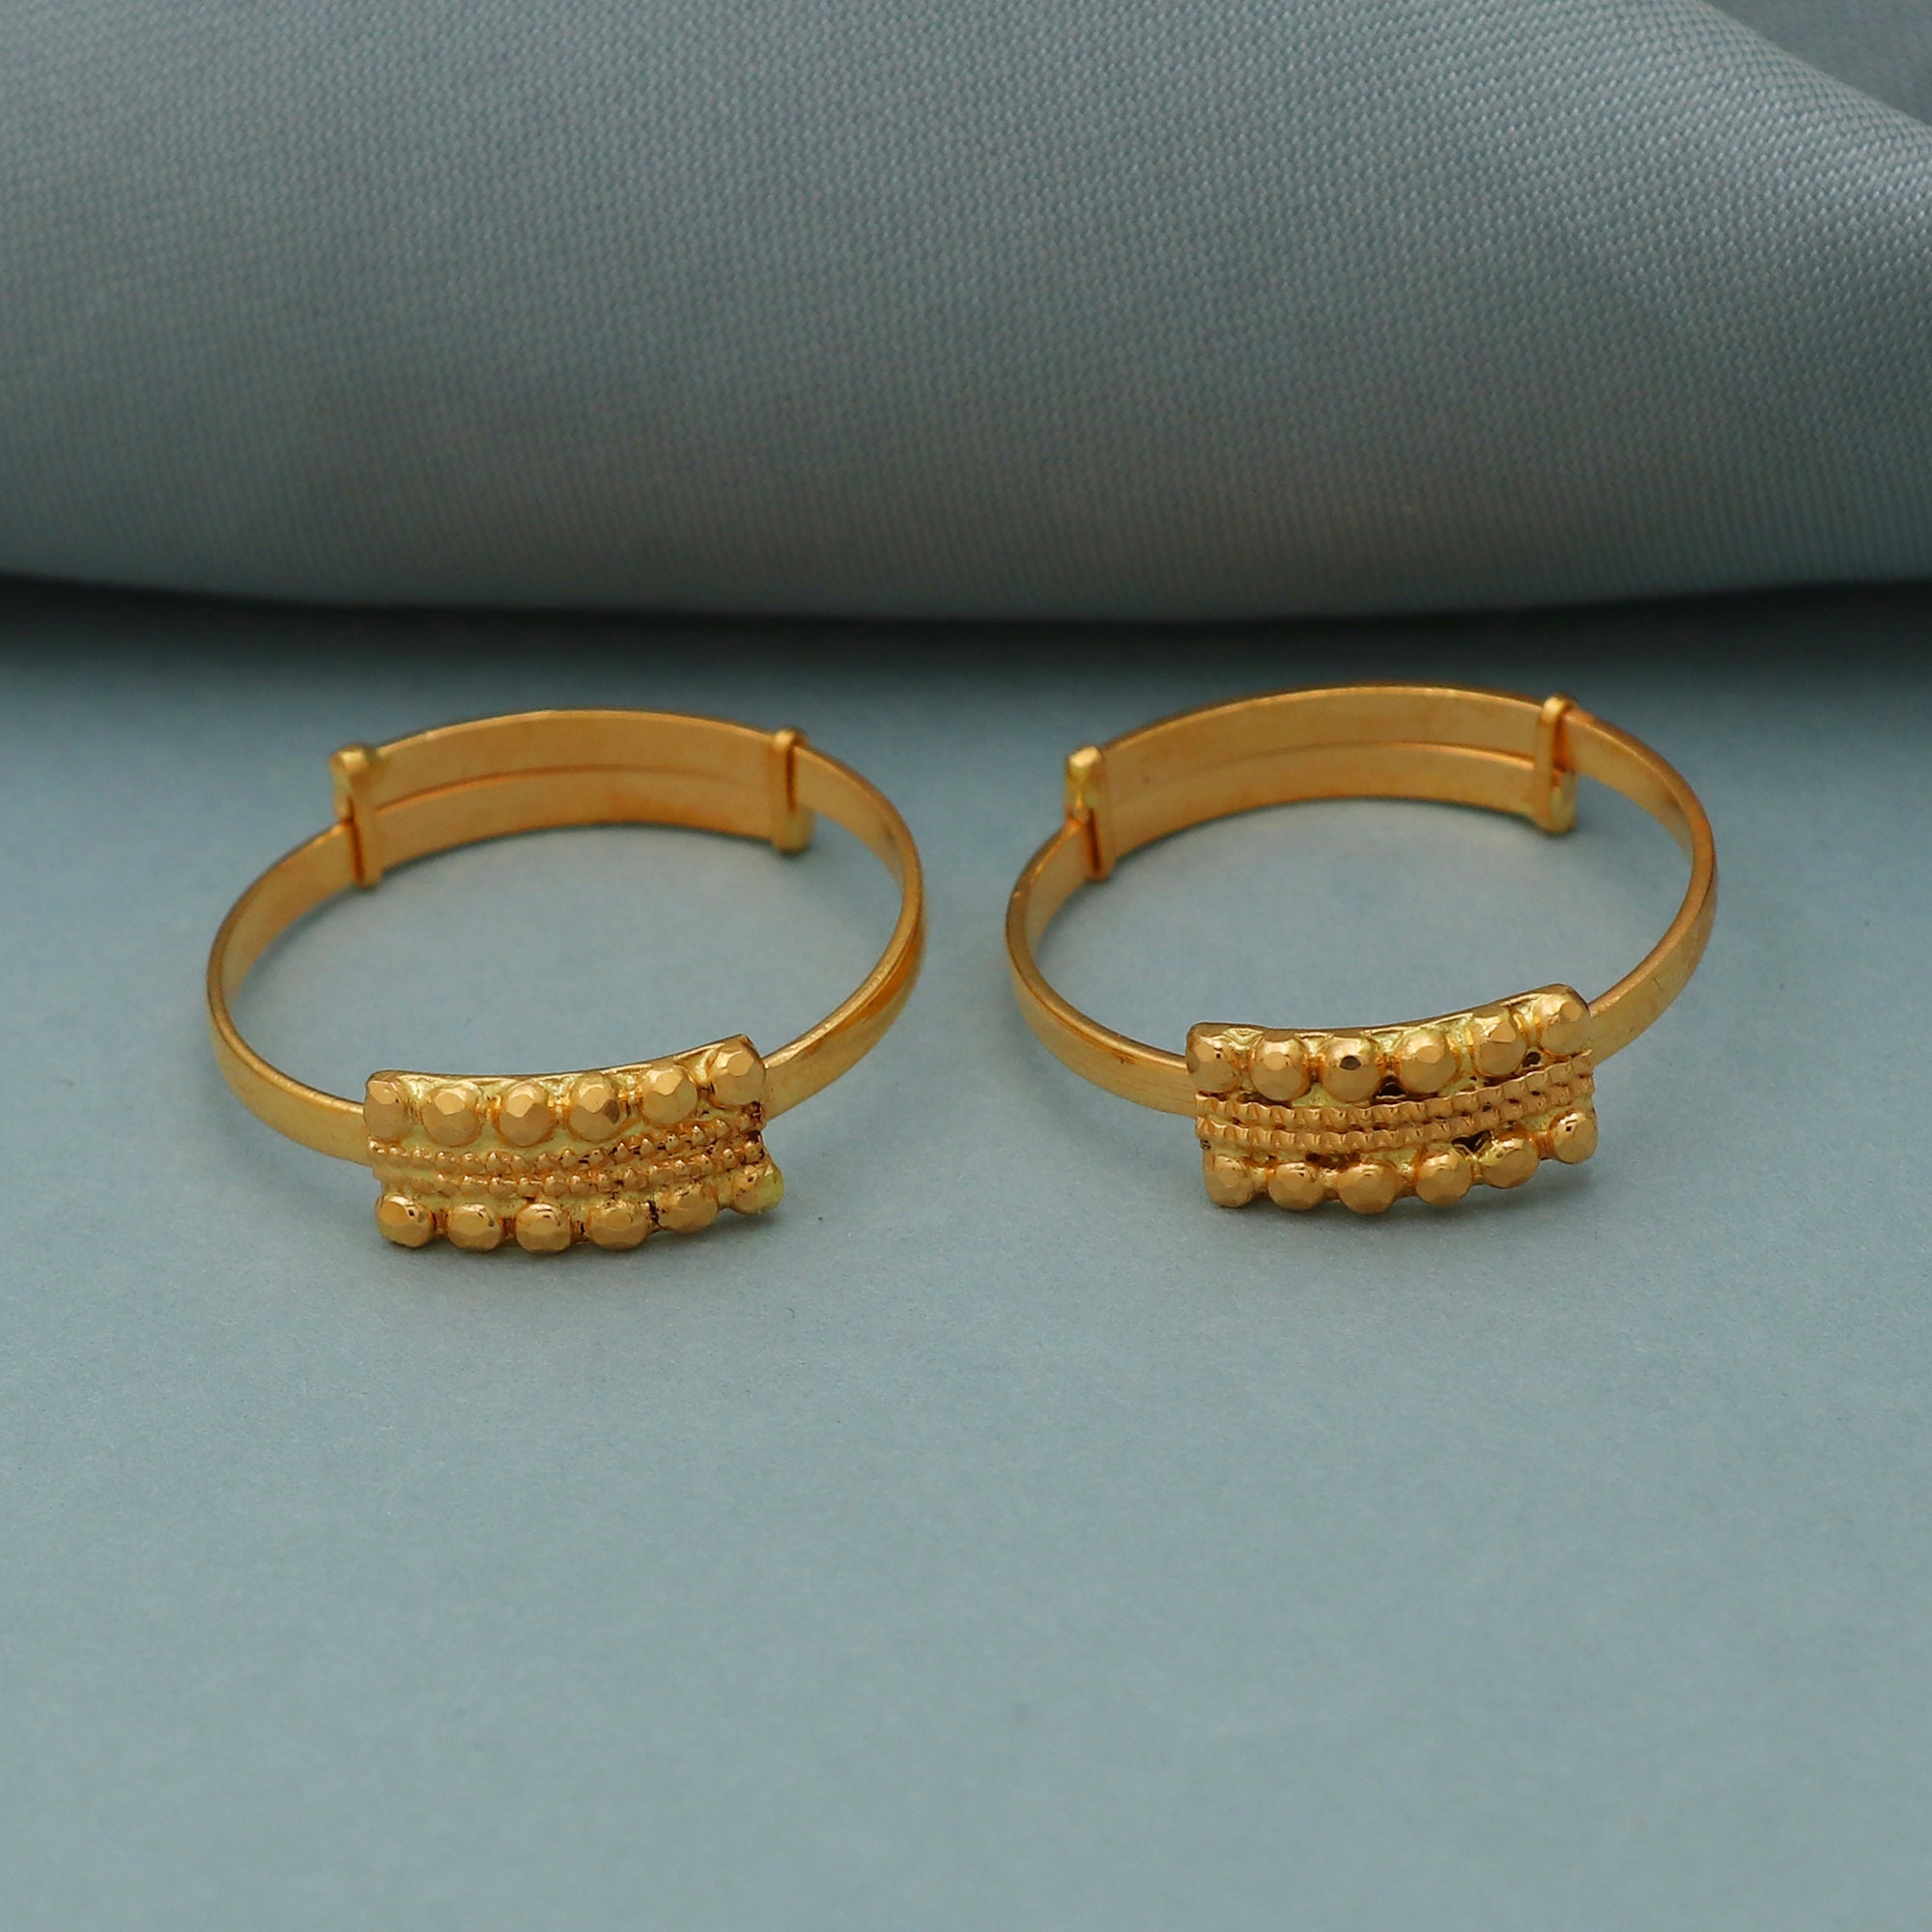 Bichiya 22k Yellow Gold Toe Ring, Handmade Gold Toe Ring Pair for Women, Indian  Gold Toe Jewelry, Real Gold Bichiya Gift, K3522 - Etsy